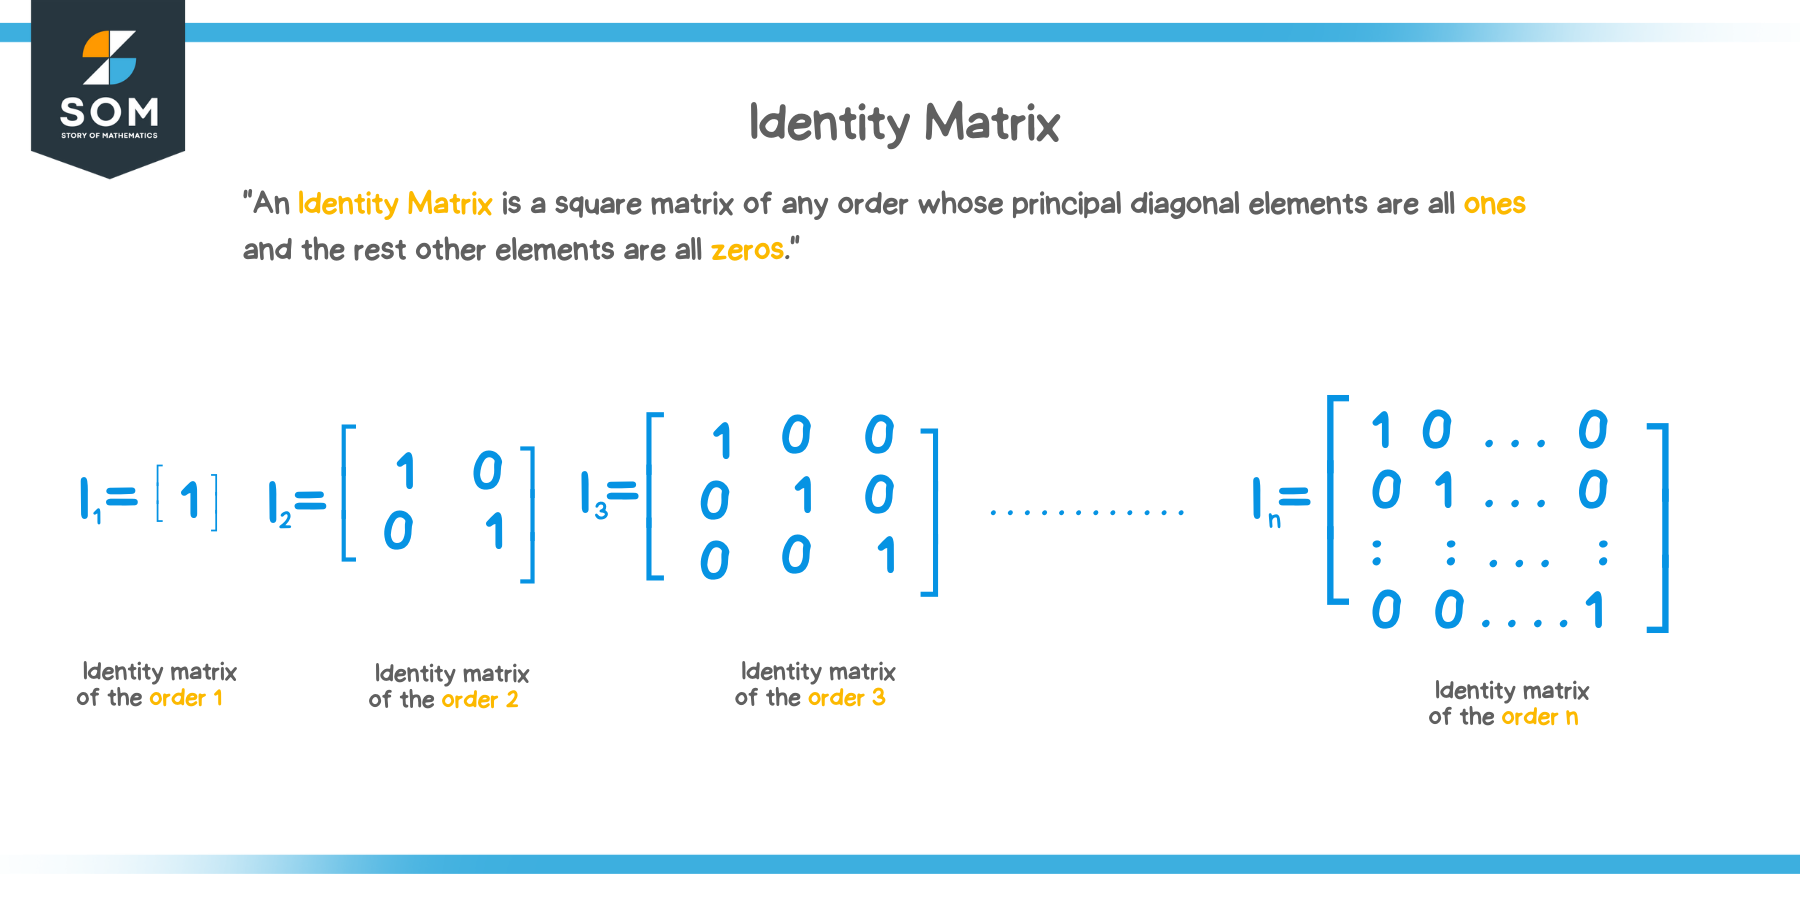 How to find Identity Matrix